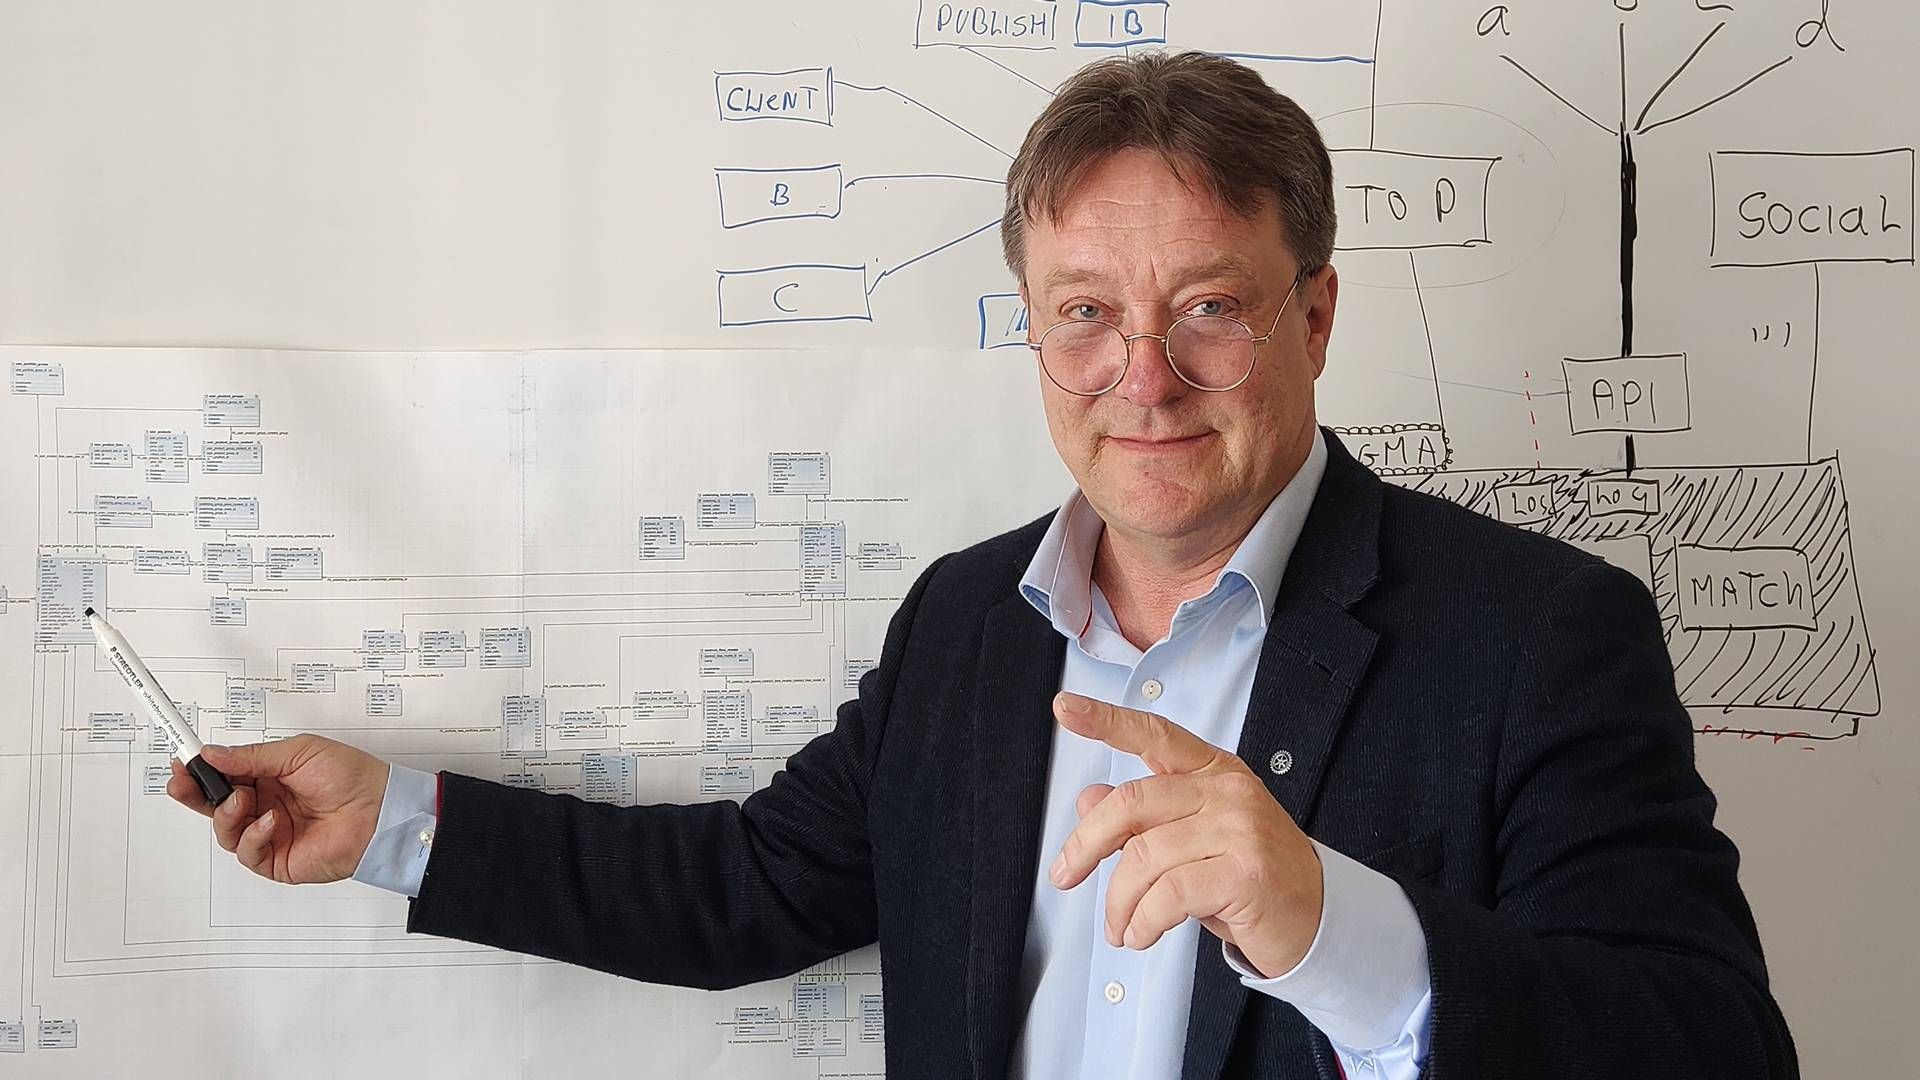 Lars Pehrsson er adm. direktør i Softcapital. | Foto: PR / Softcapital